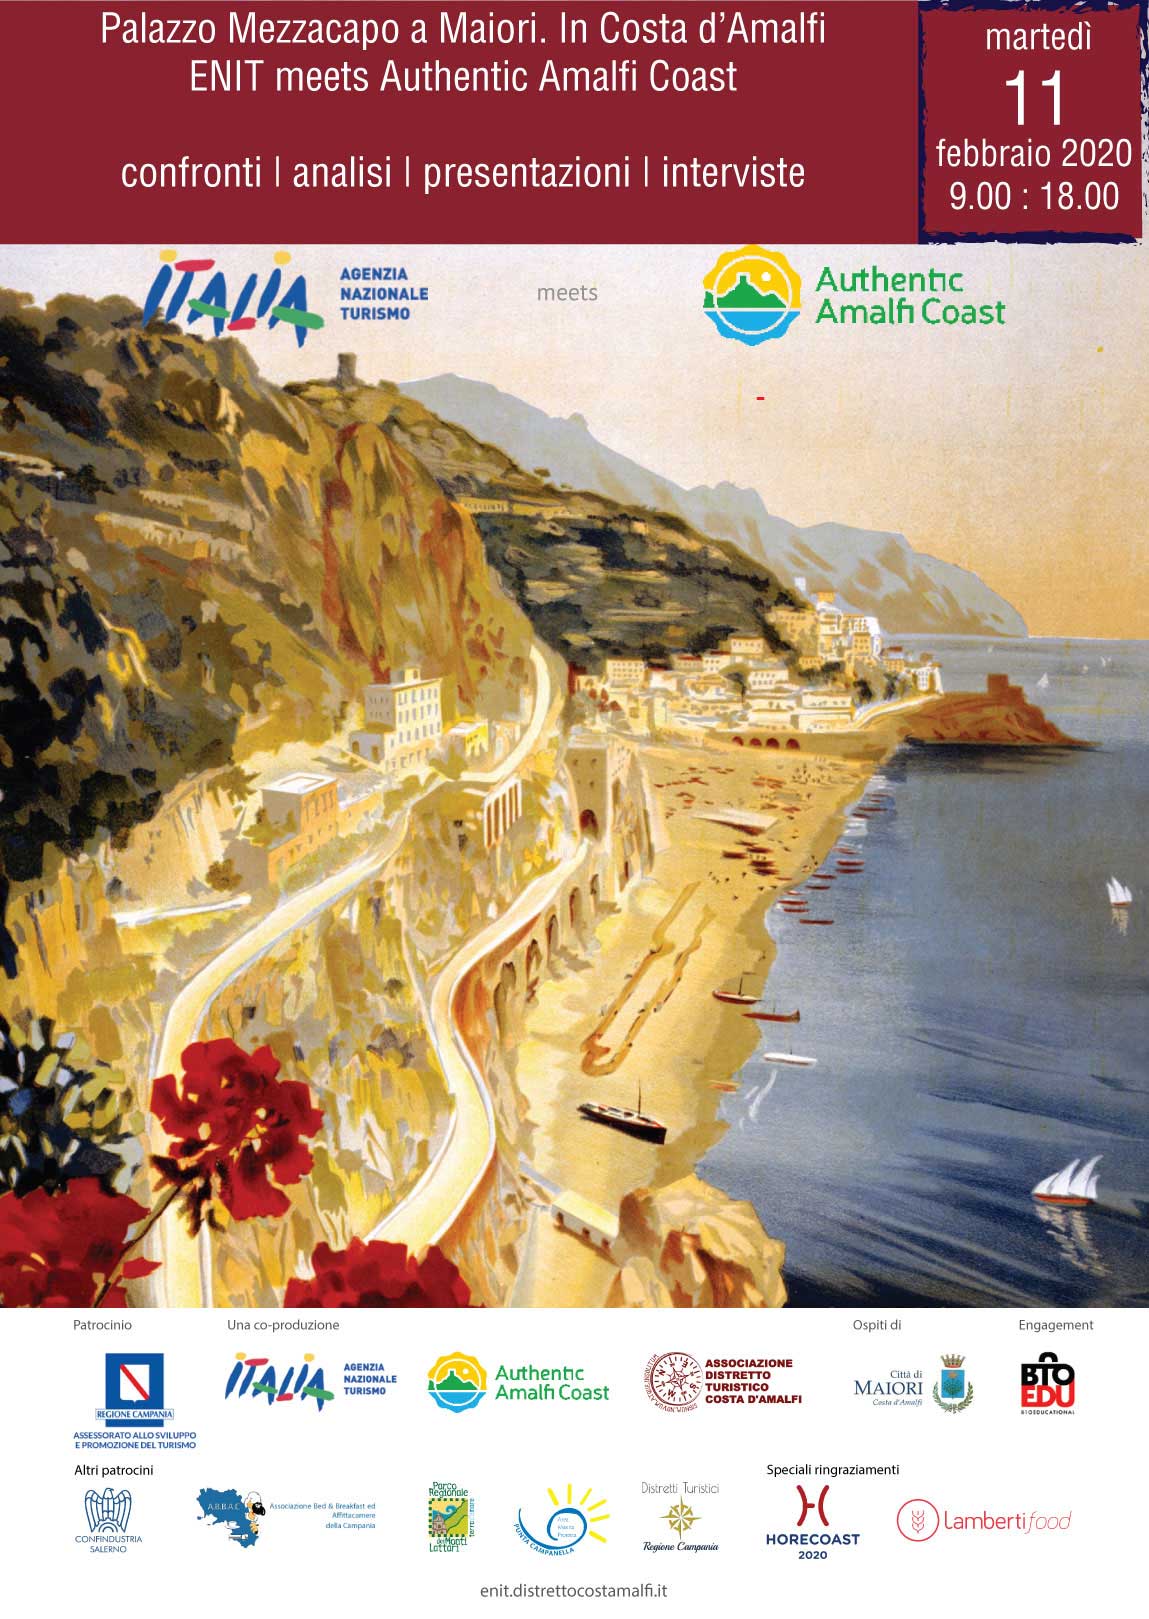 ENIT meets Authentic Amalfi Coast 11 febbraio 2020